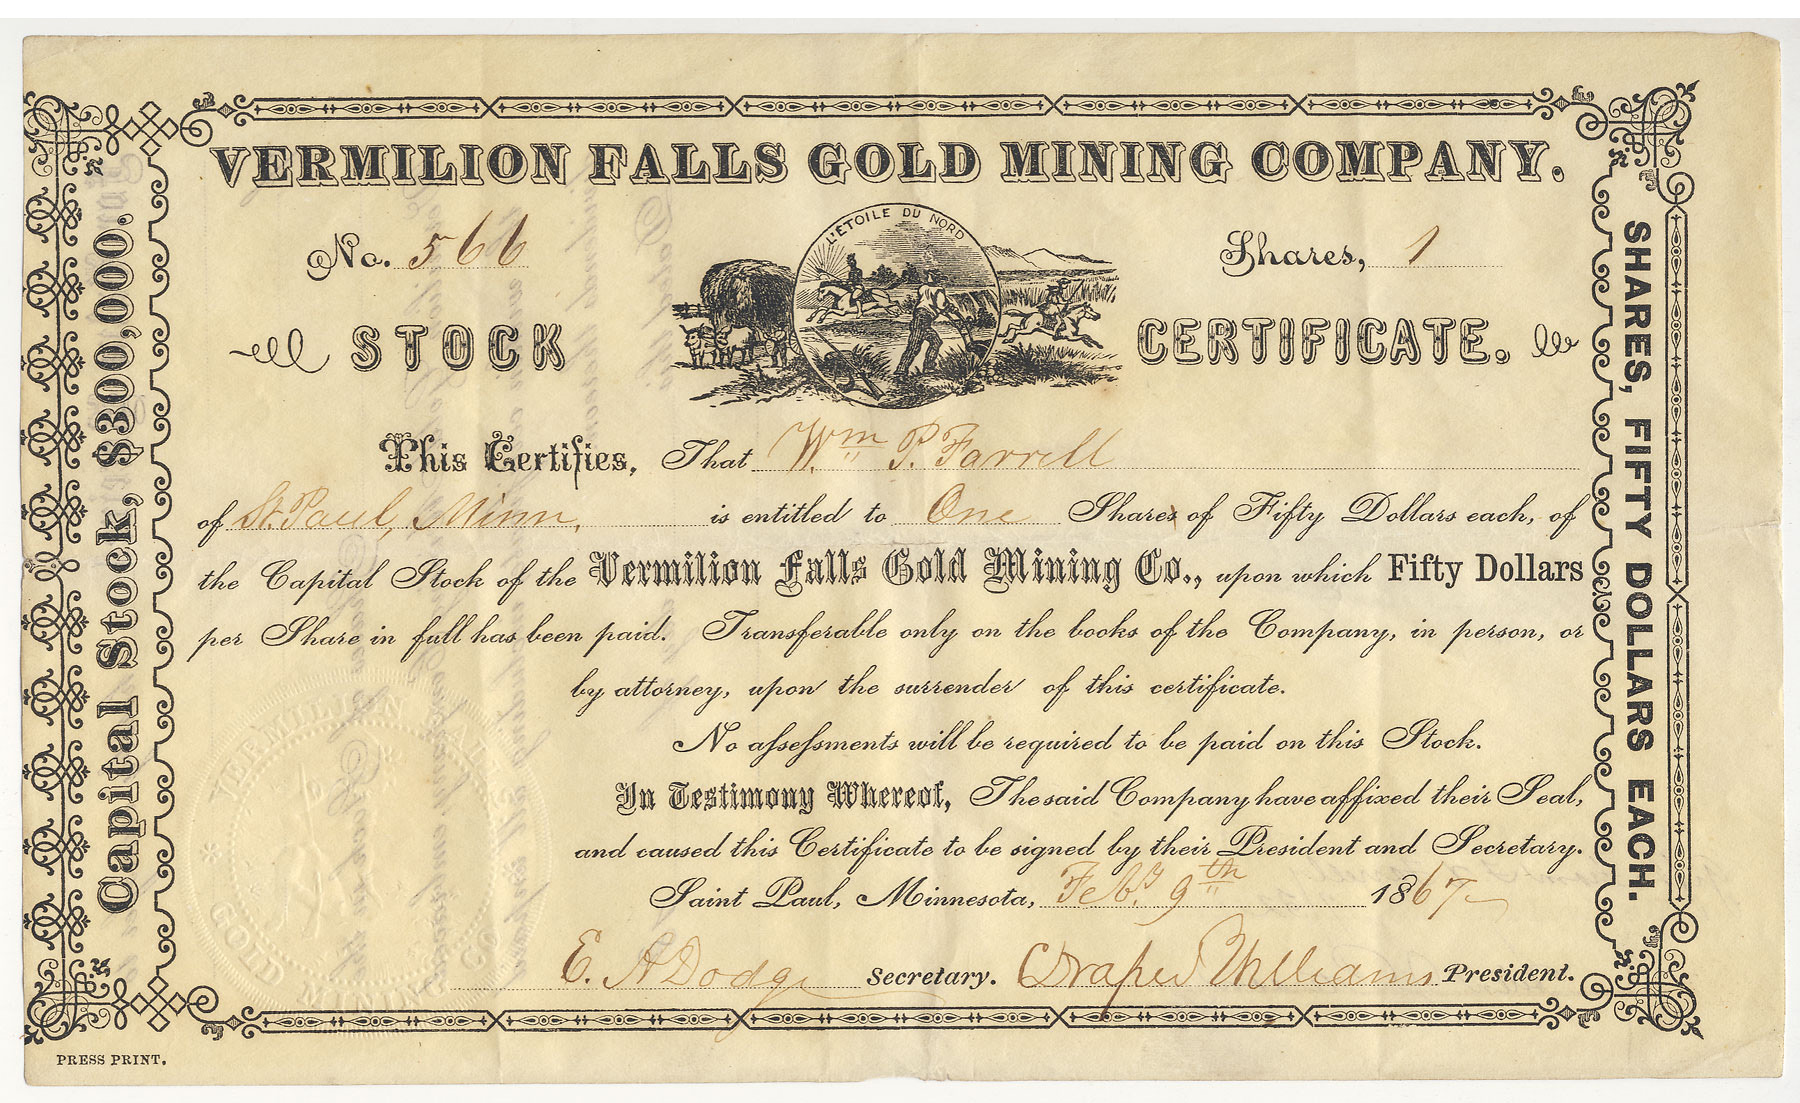 Share No. 566 Vermilion Falls Gold Mining Company